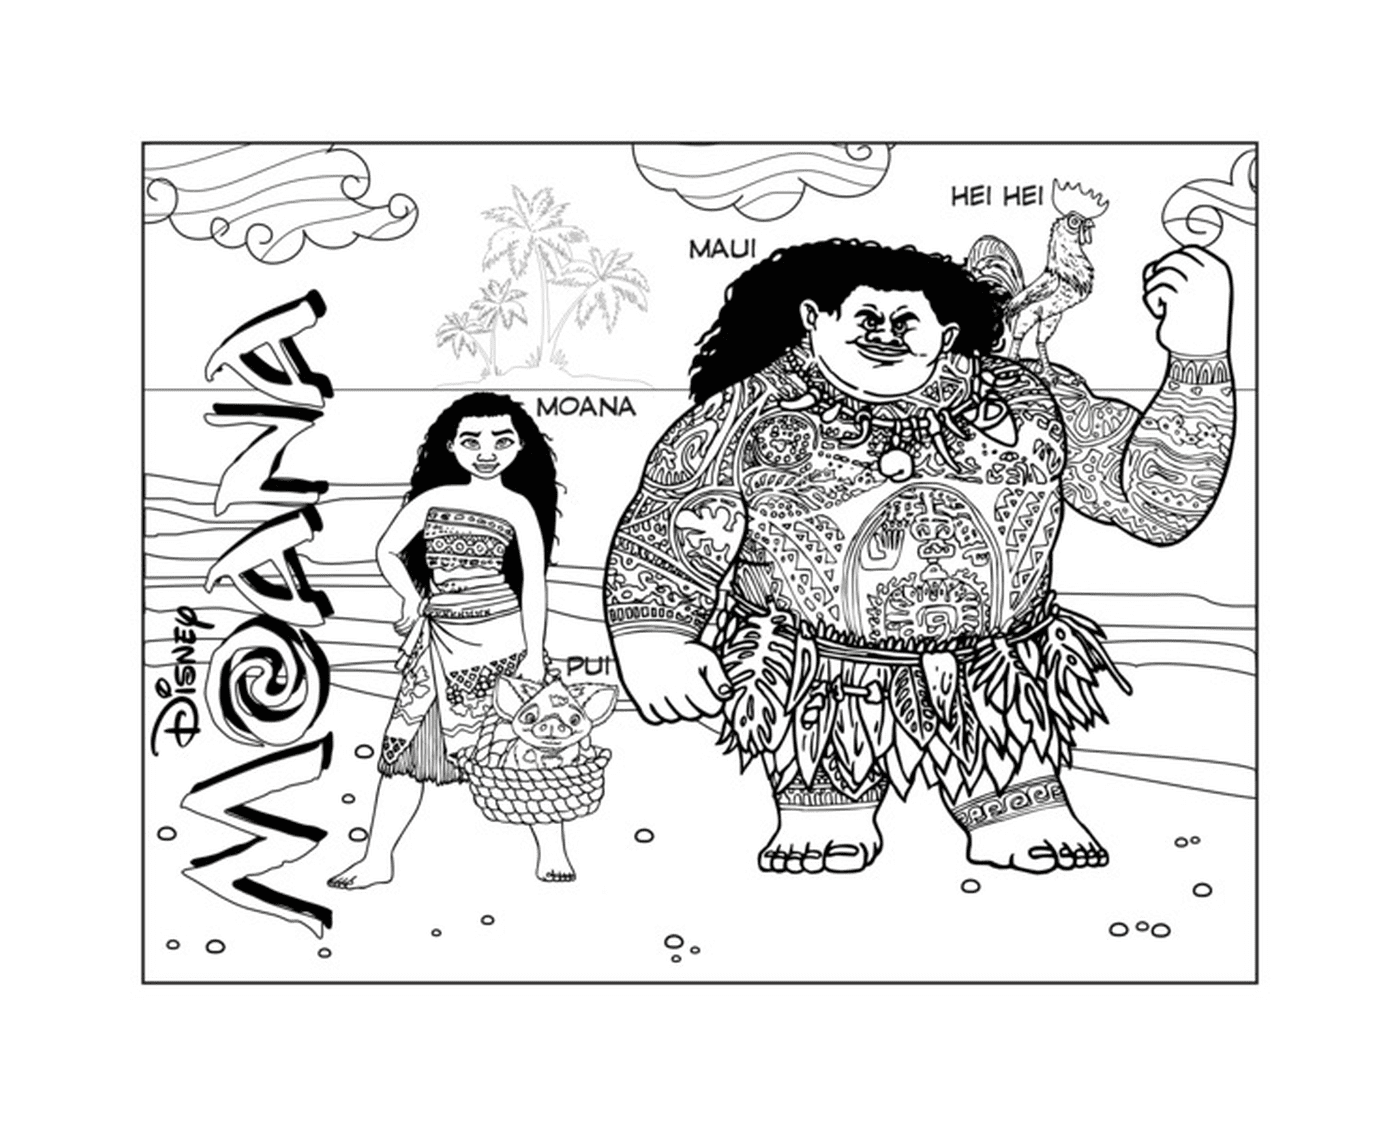  Moana und Maui, Abenteurer-Duo 